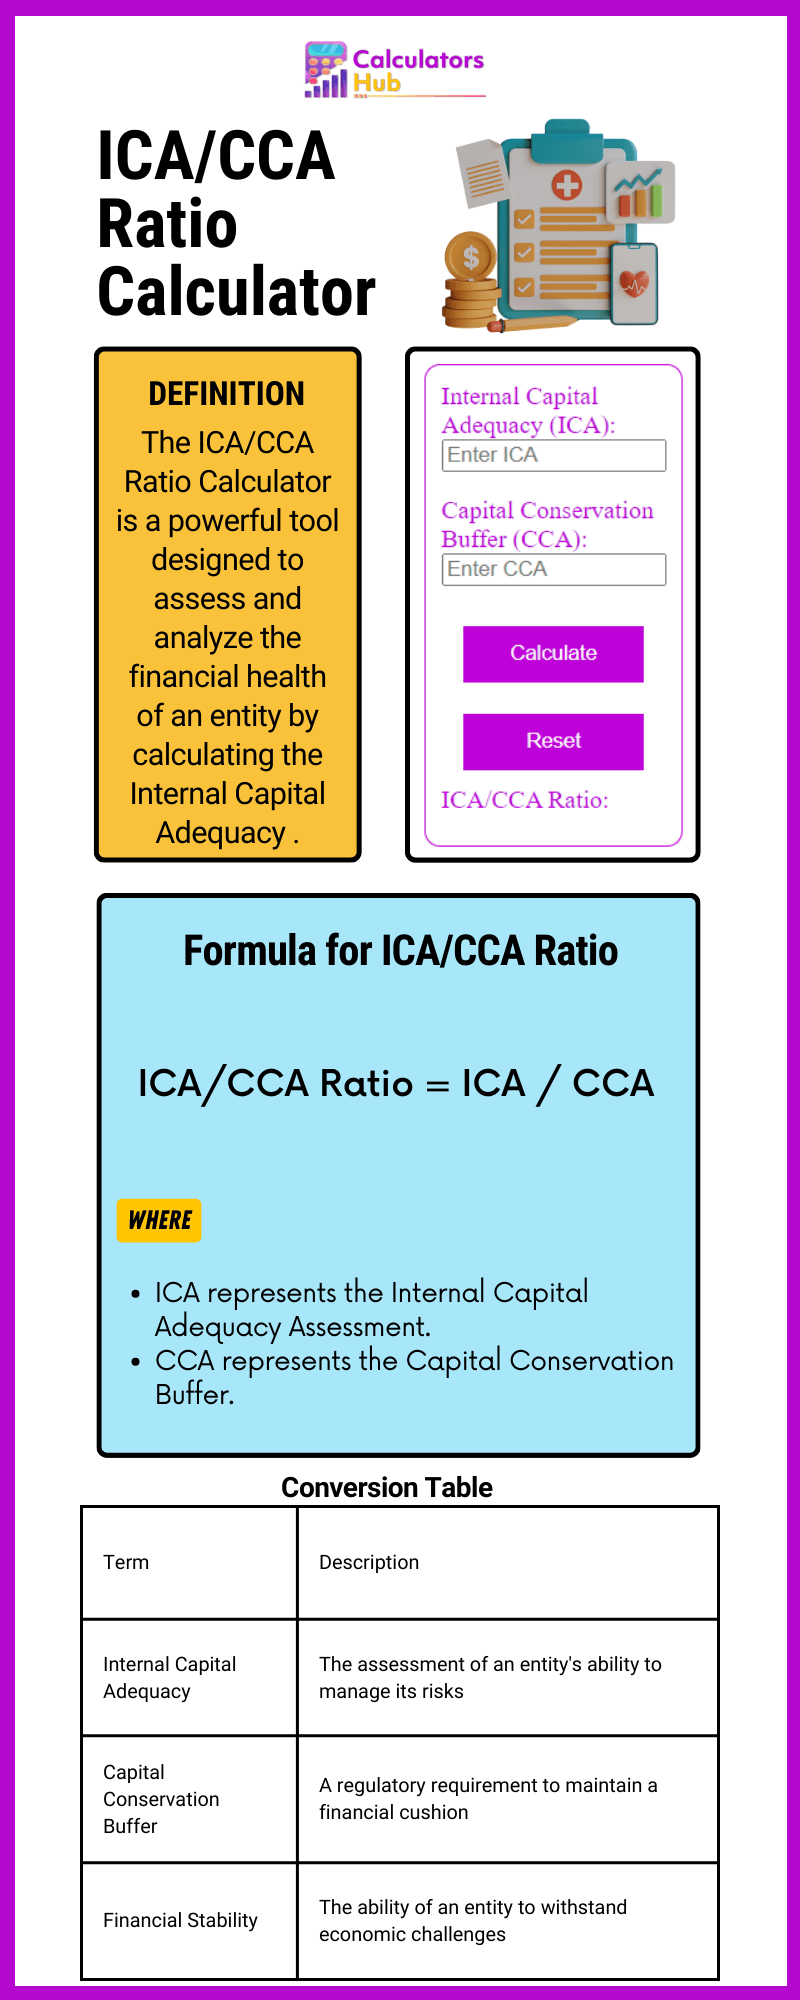 ICA/CCA Ratio Calculator